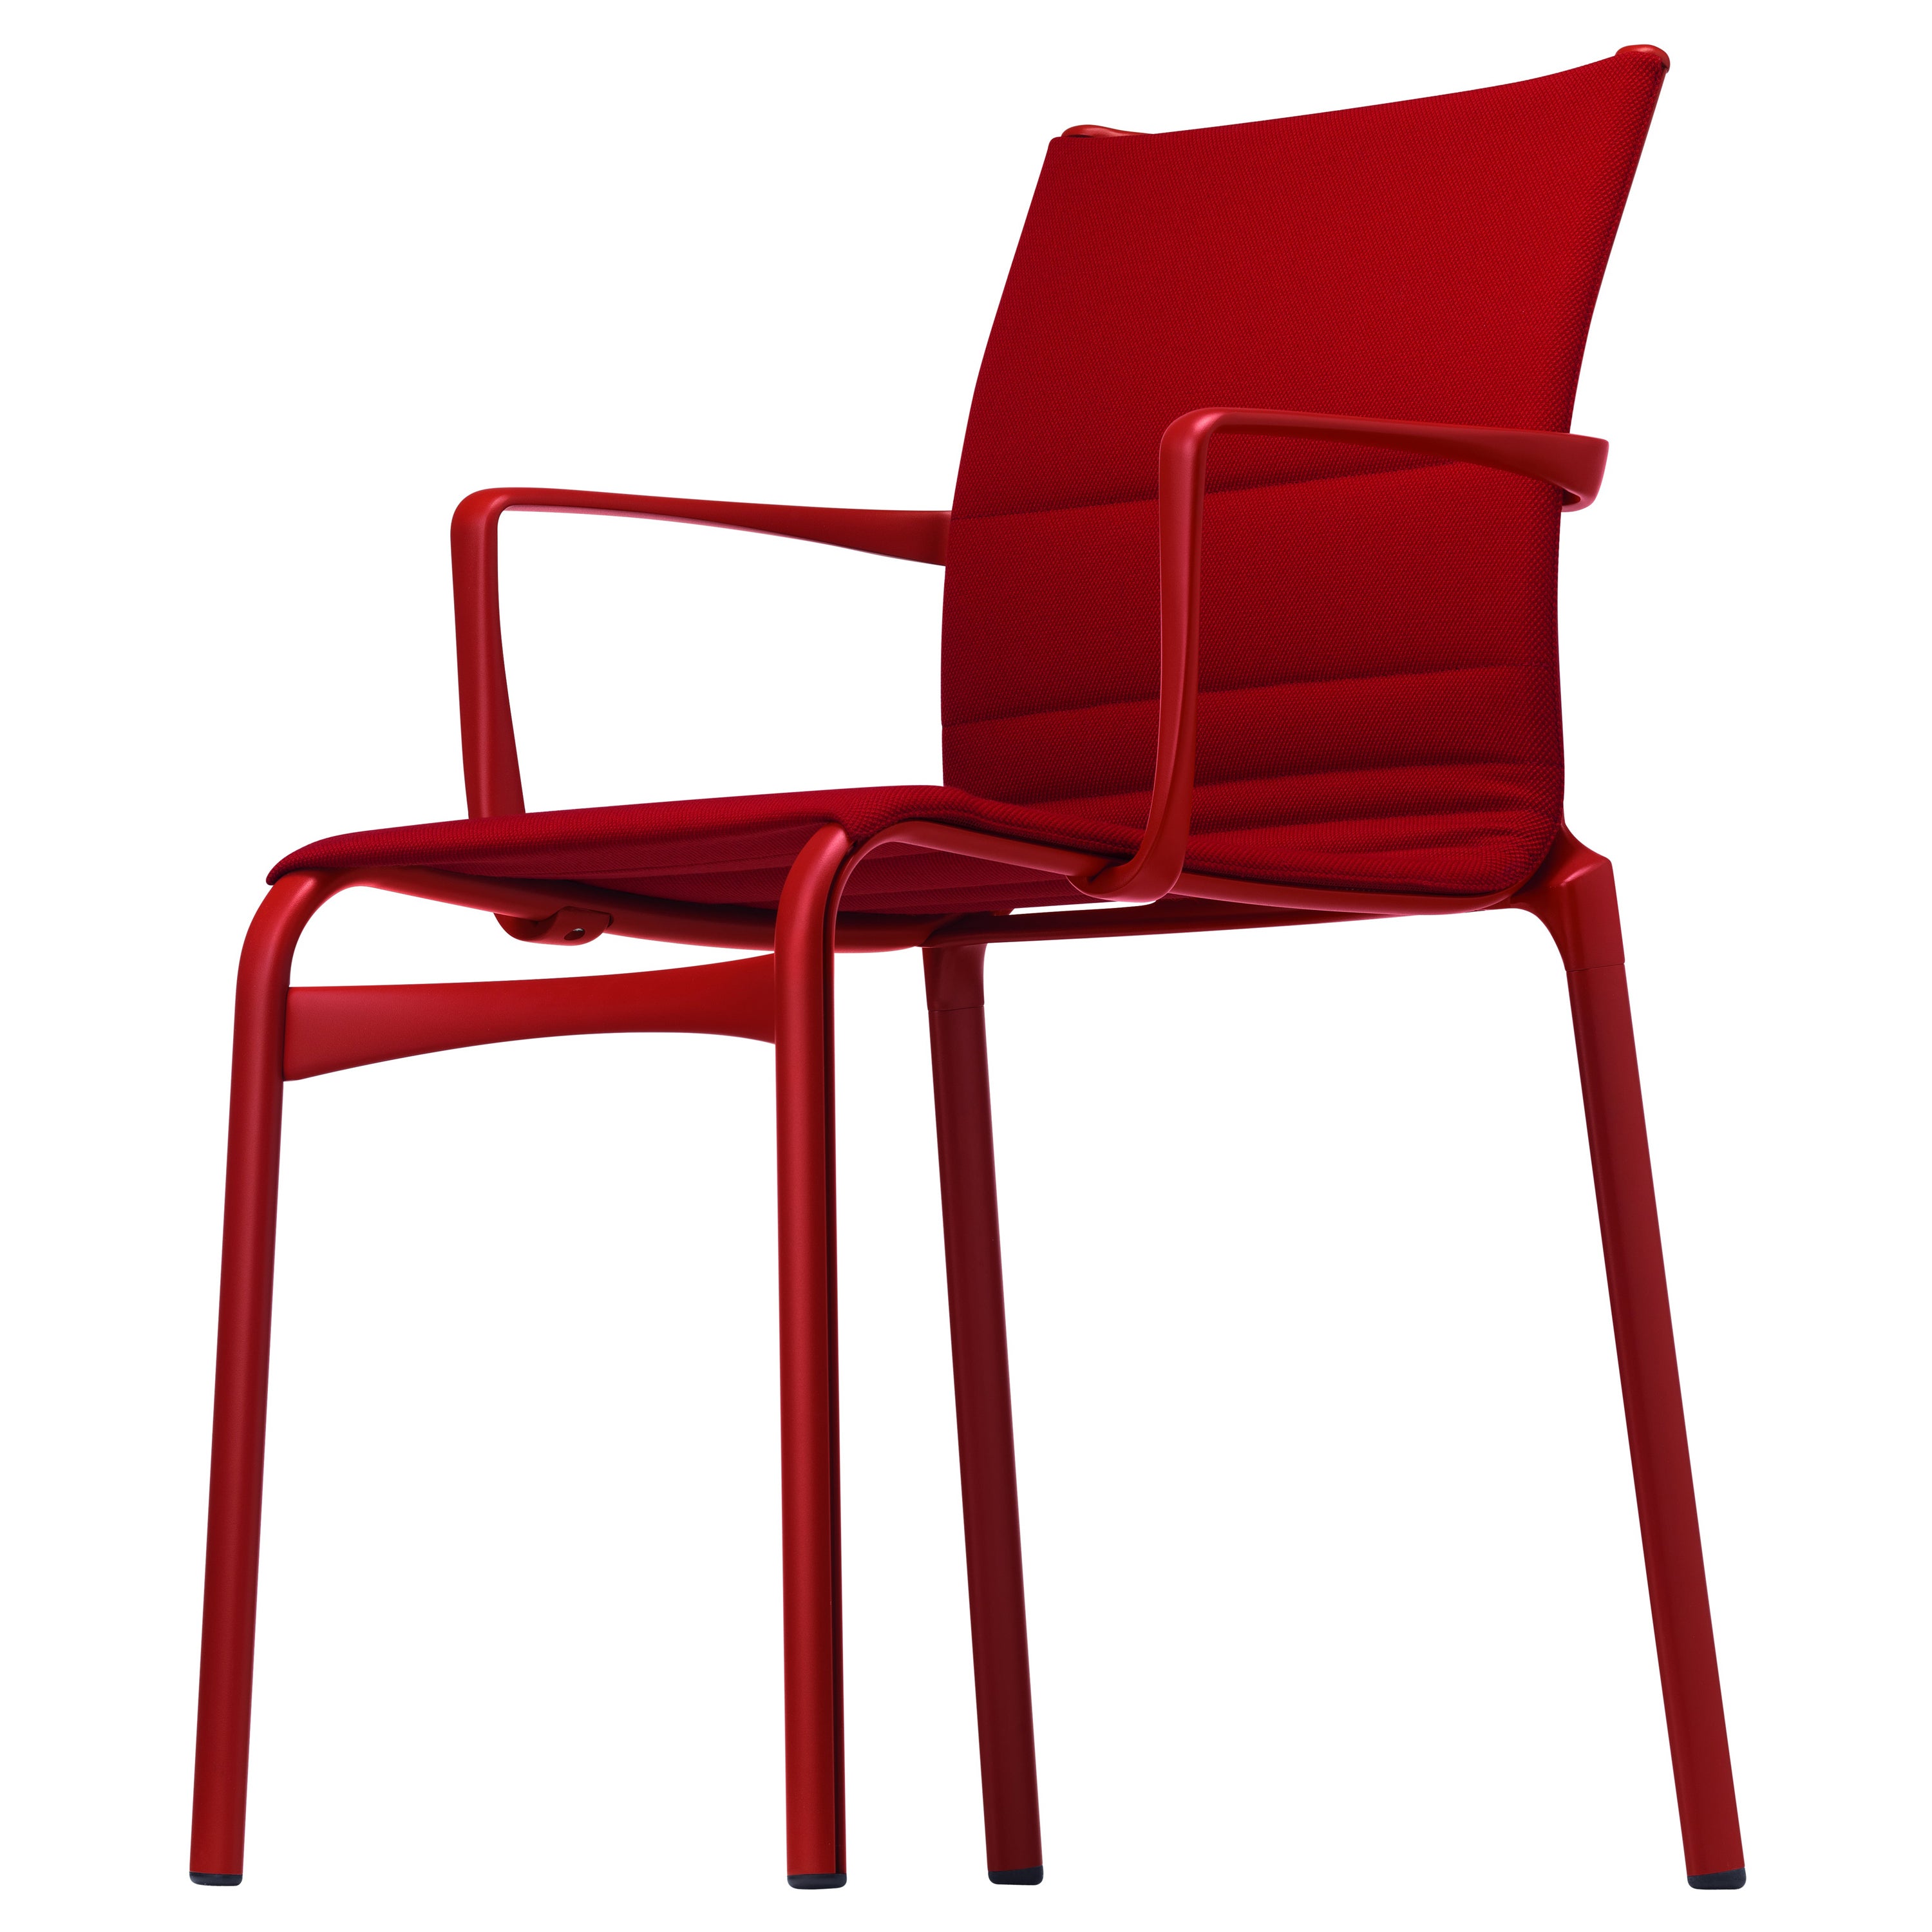 Alias Bigframe 44, Sessel mit roter Polsterung und lackiertem Aluminiumrahmen